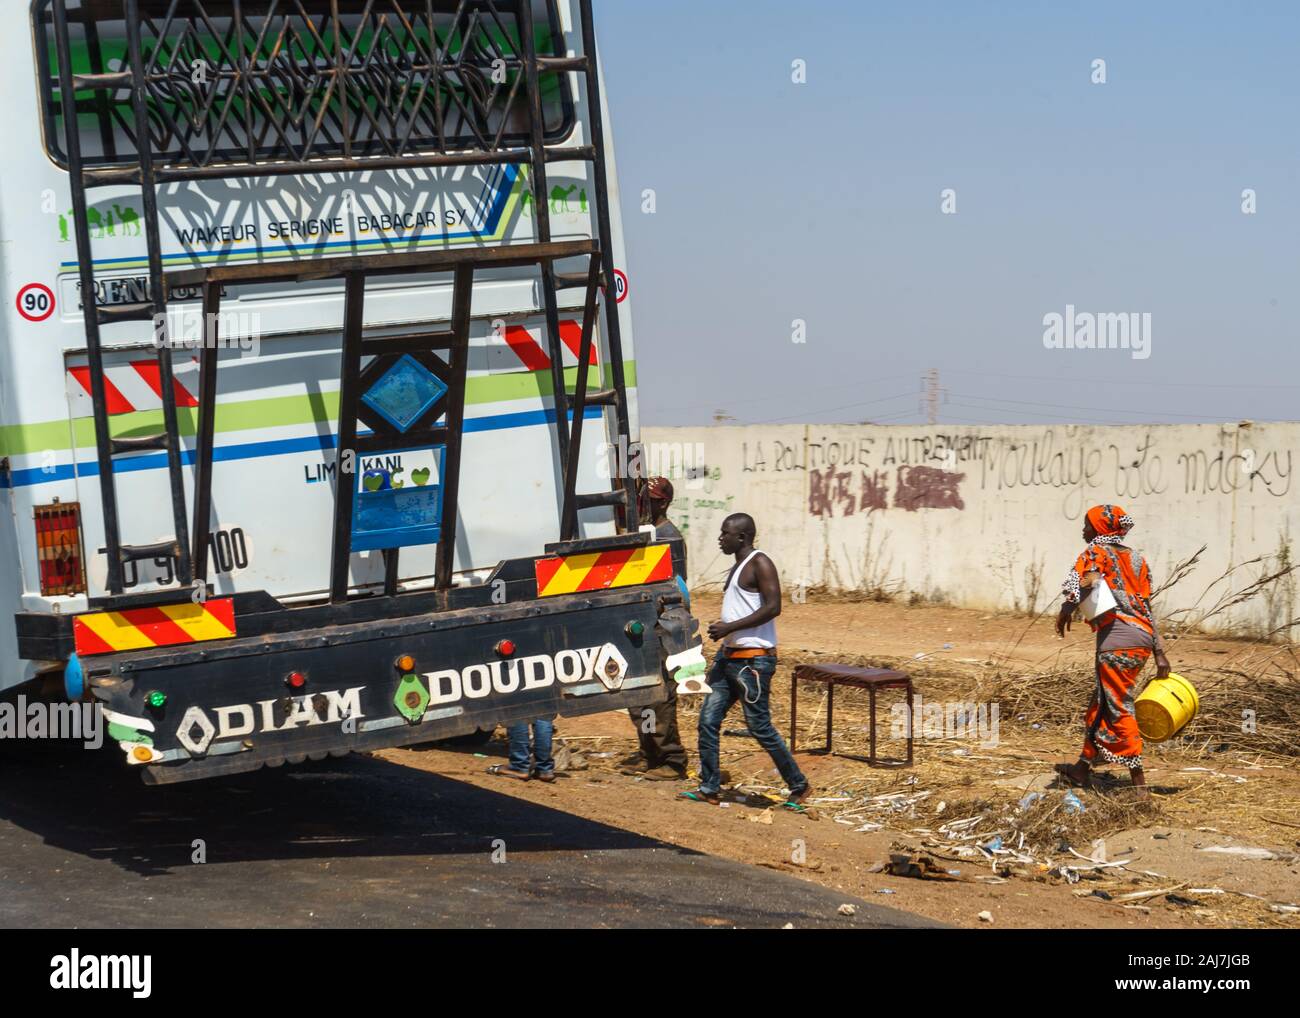 People getting on the bus to Dakar on the roadside in Senegal, Africa - Photograph: Iris de Reus Stock Photo